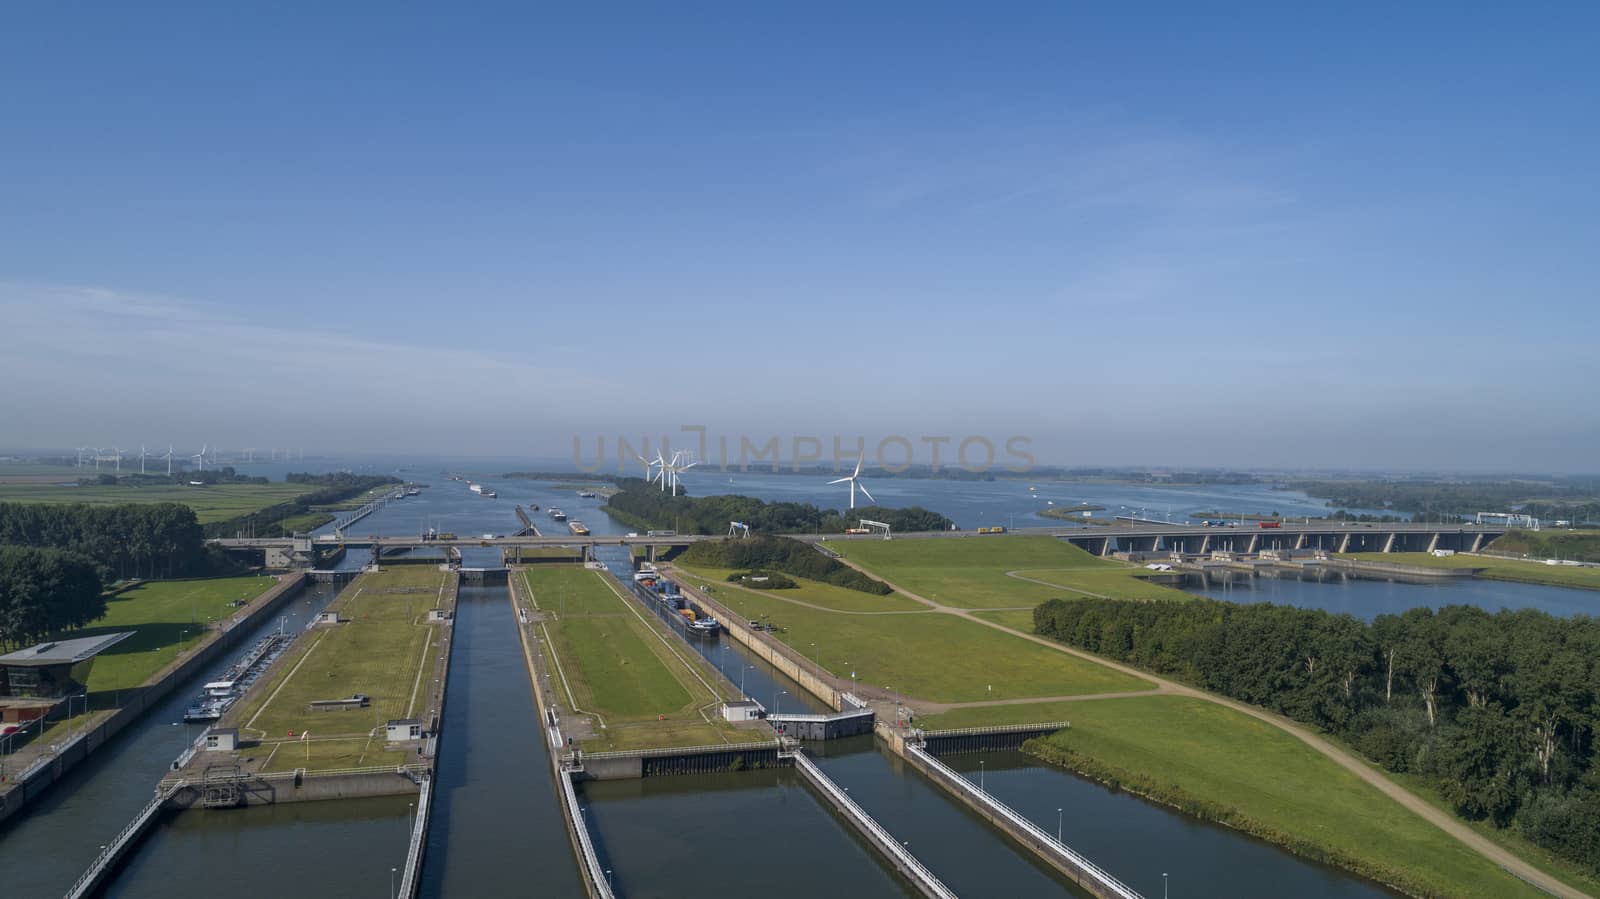 Volkeraksluizen Hollands Diep. Drone photograpy from the delta w by Tjeerdkruse